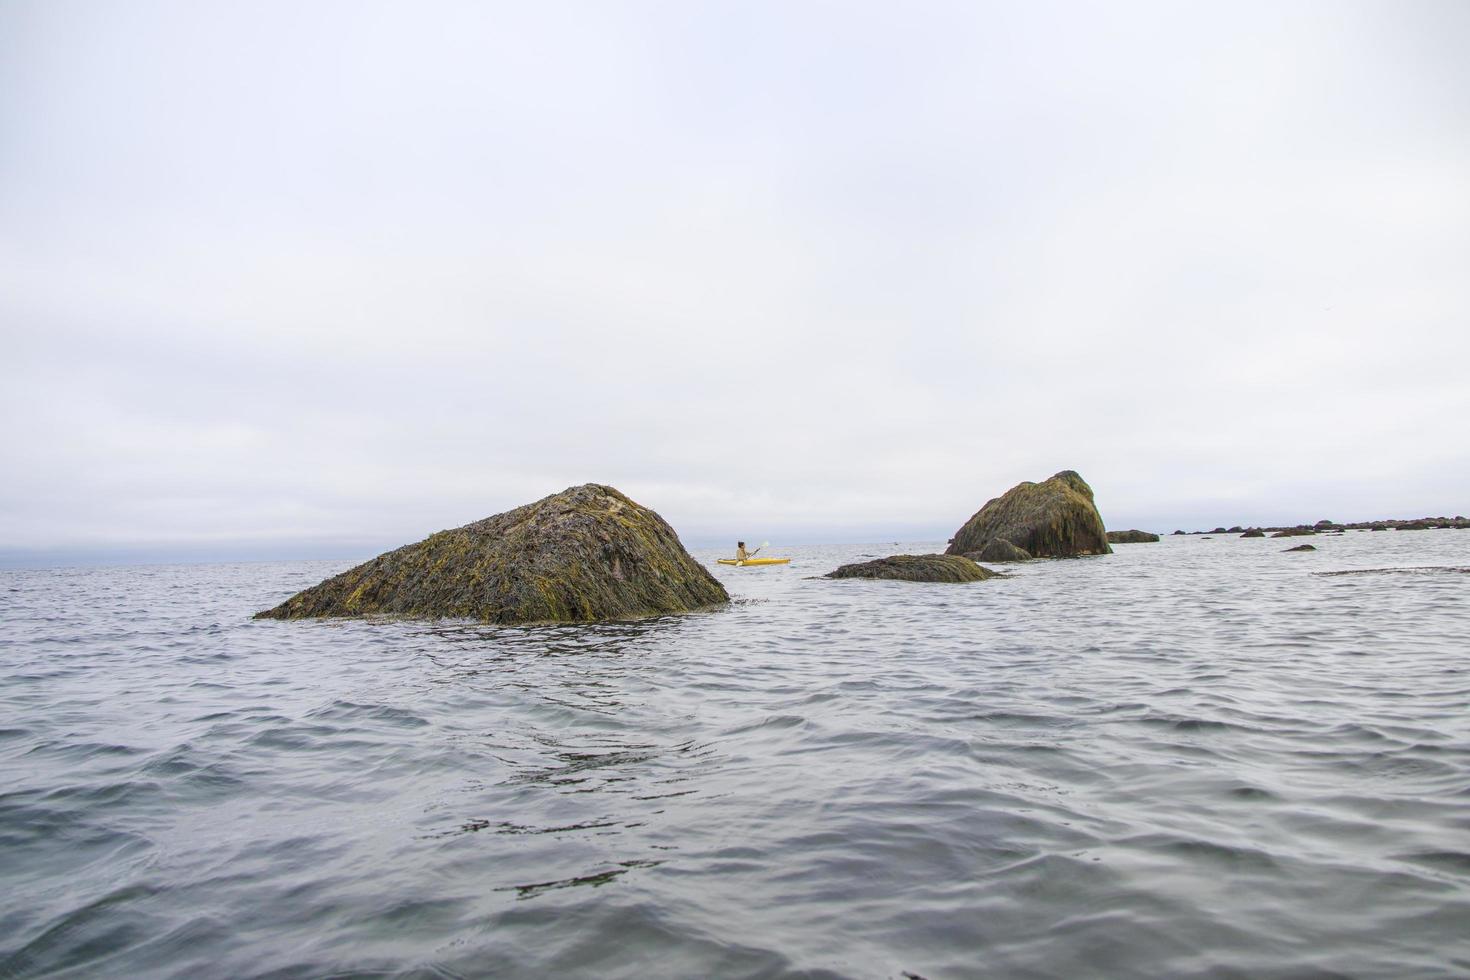 kvinna paddla kajak i en gul kajak runt stenar i havet foto